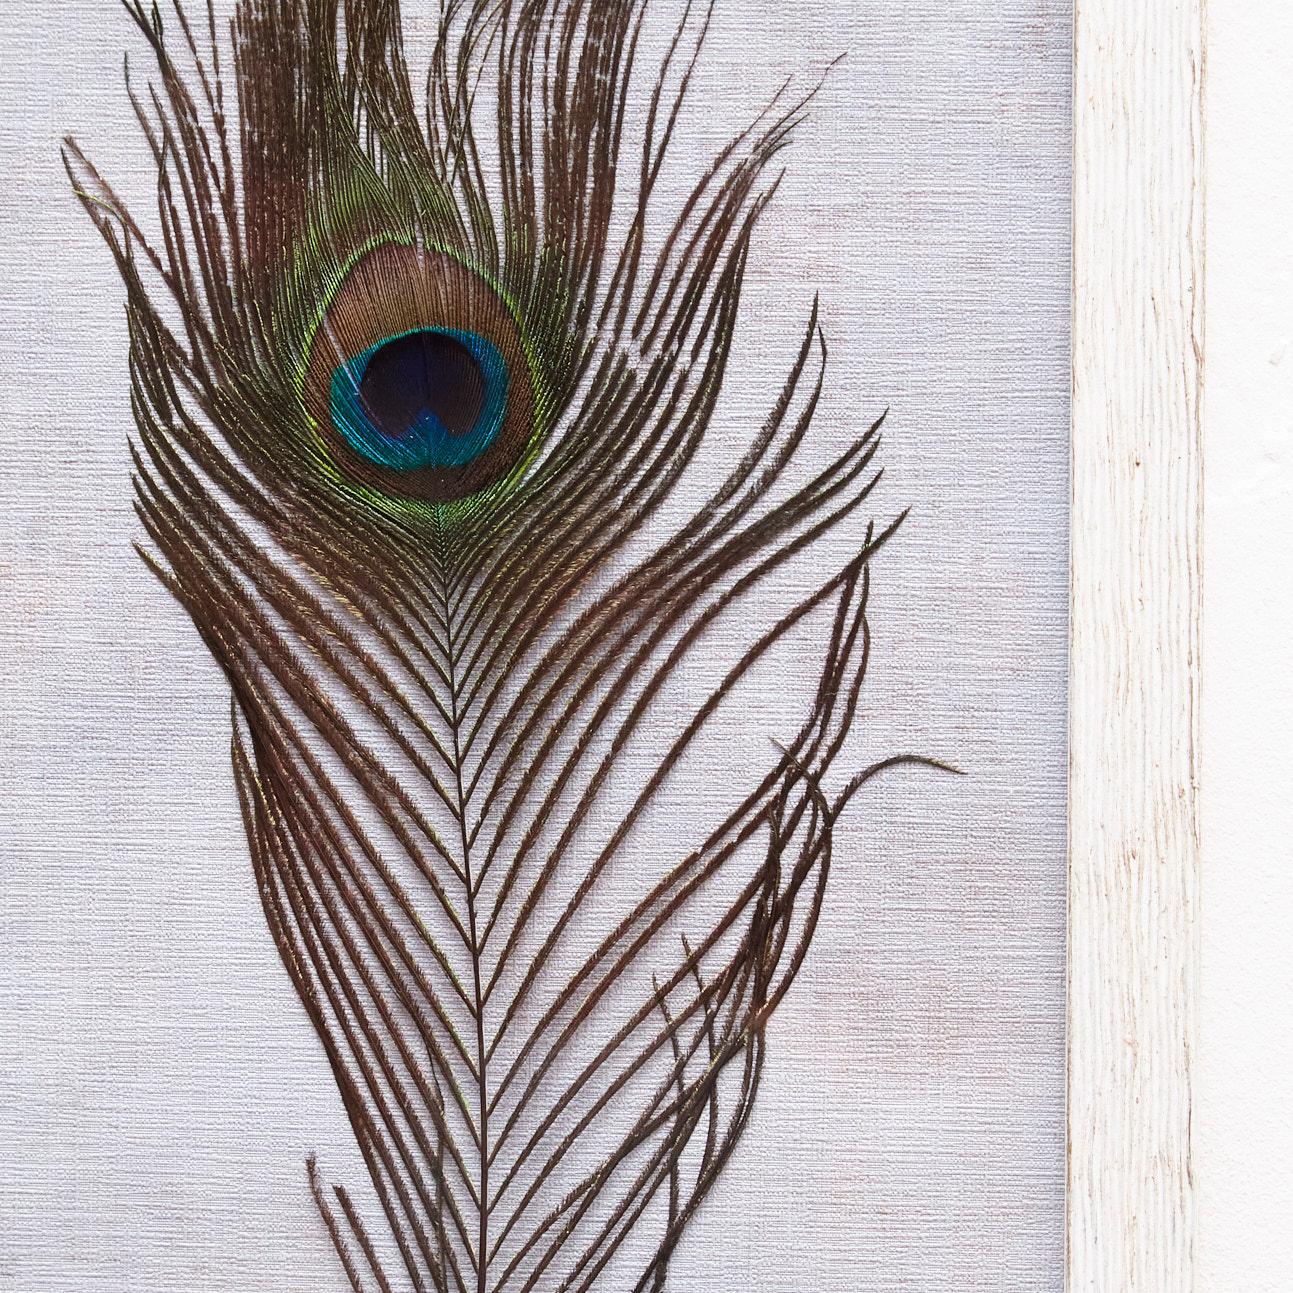 Wood Framed Original Peacock Feather, circa 1970